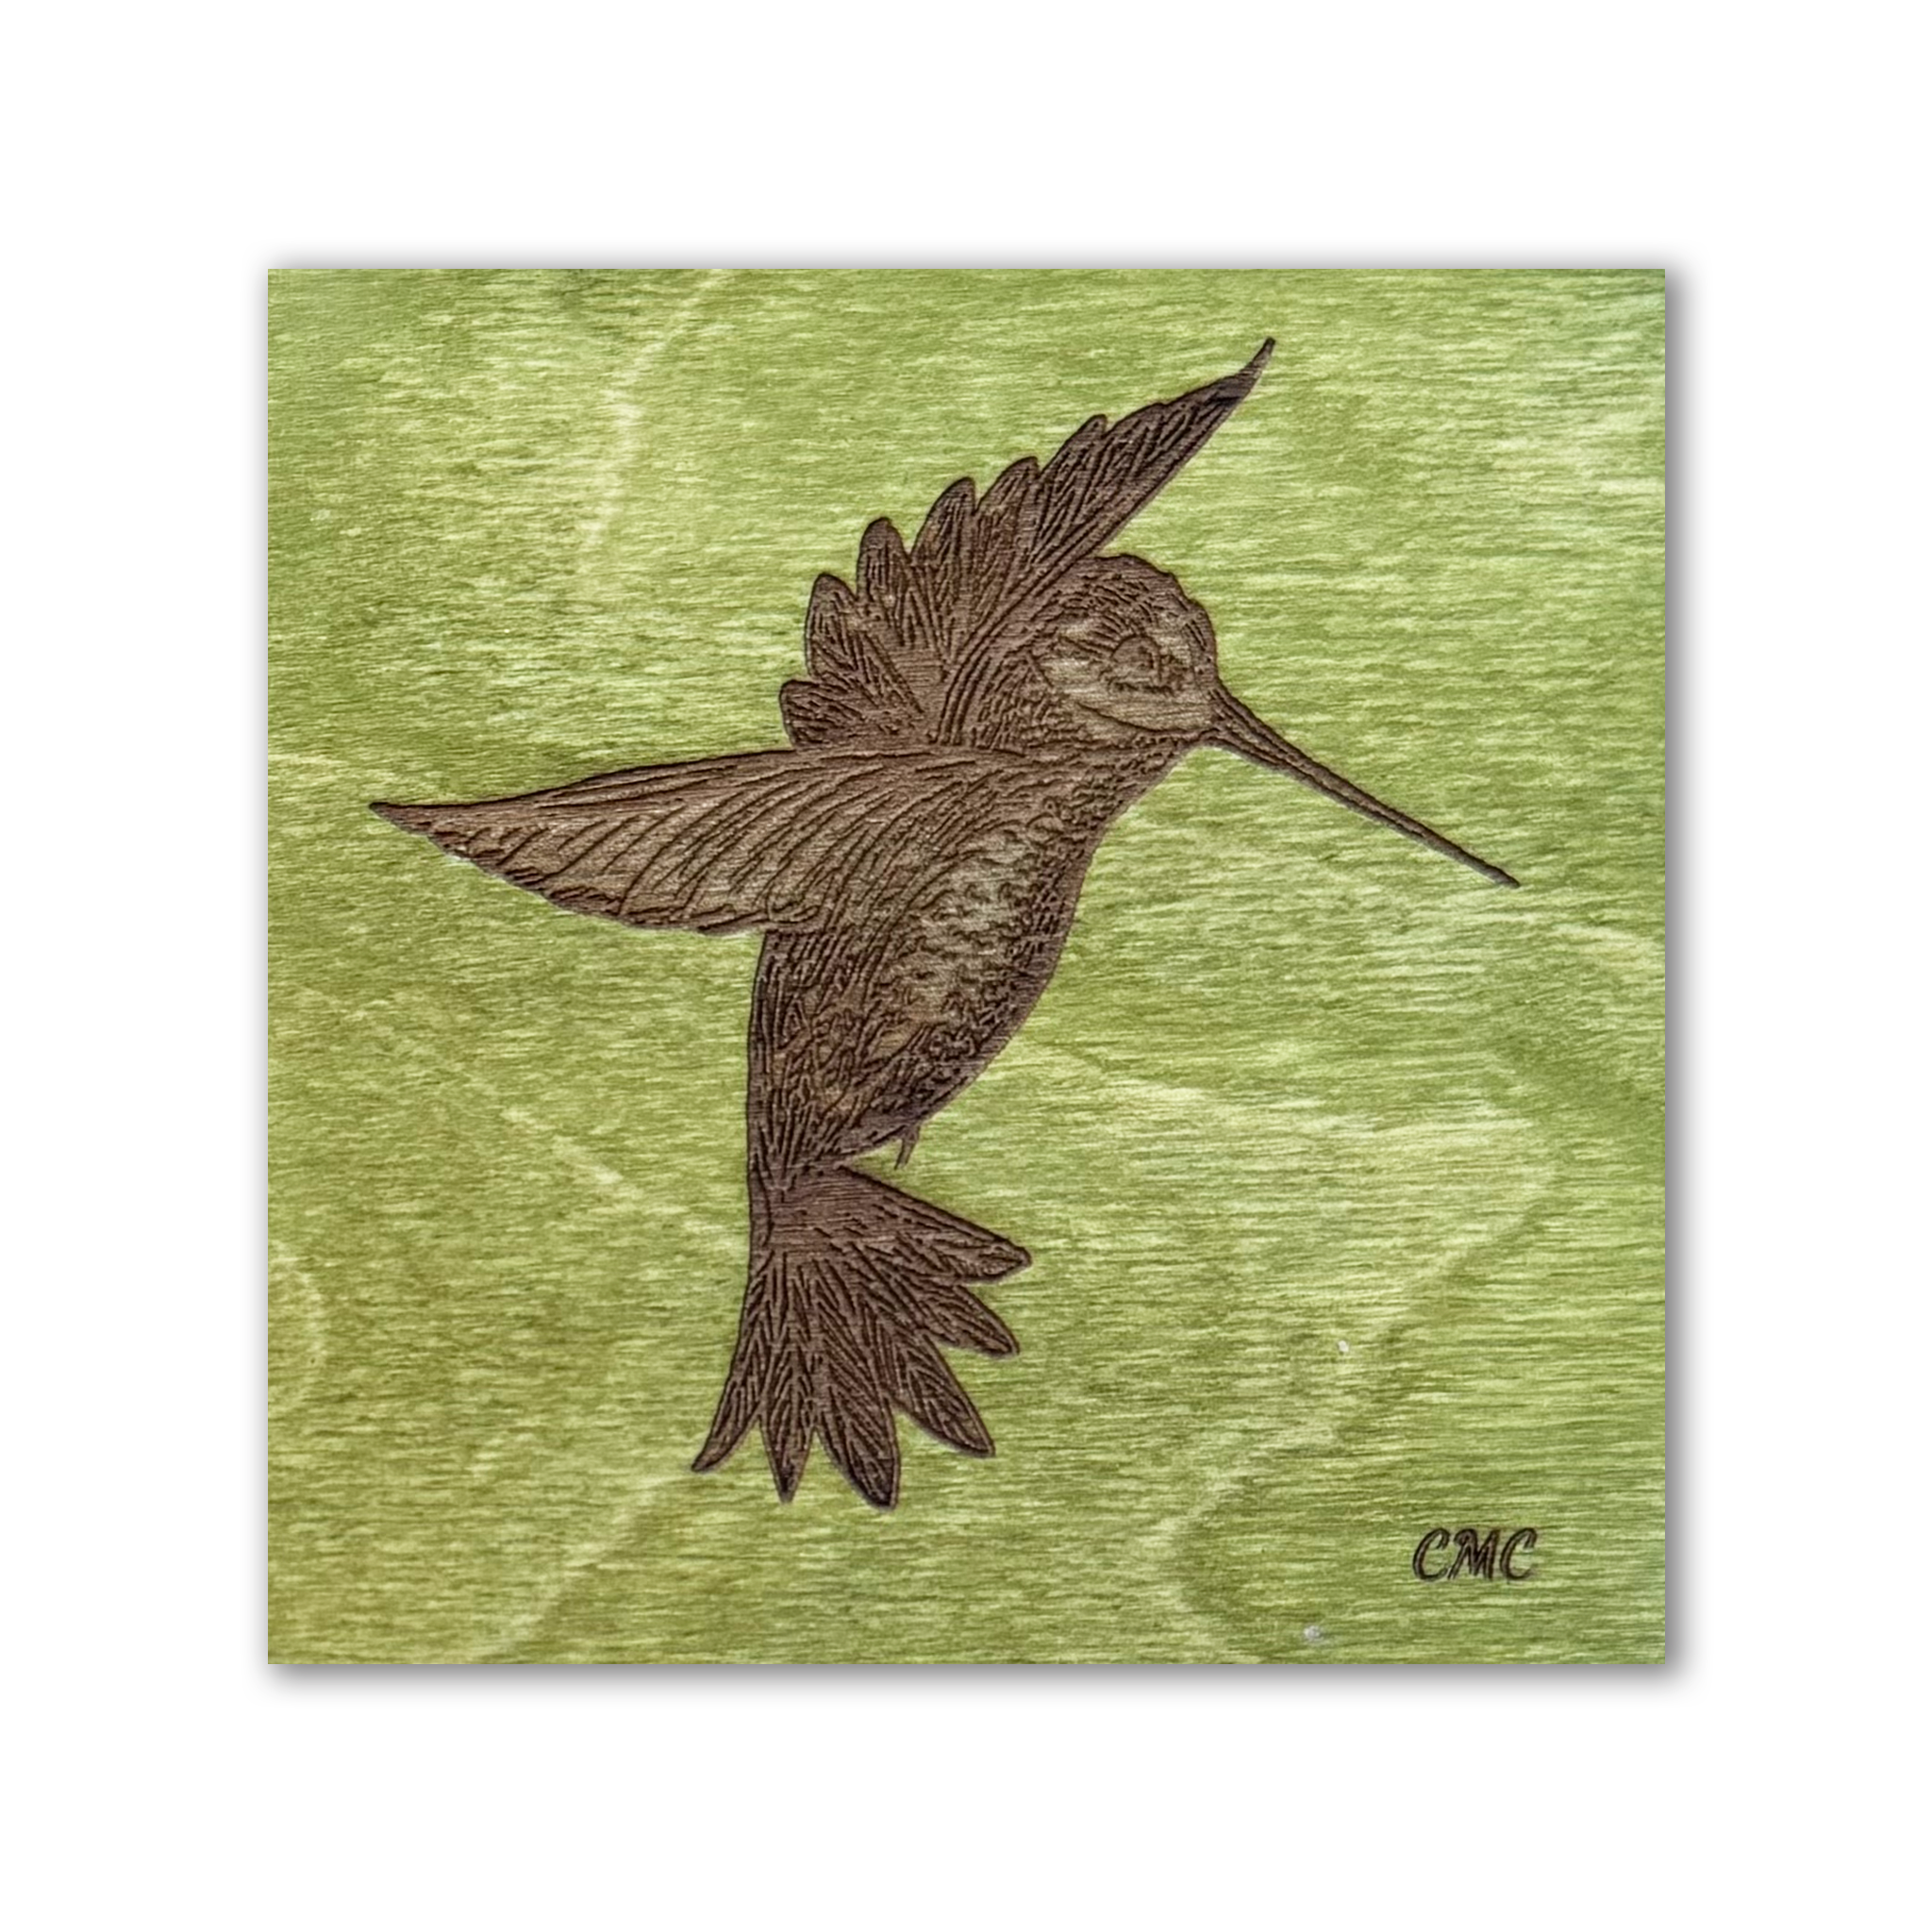 Hummingbird with Wings Closed | Wood Art Tile